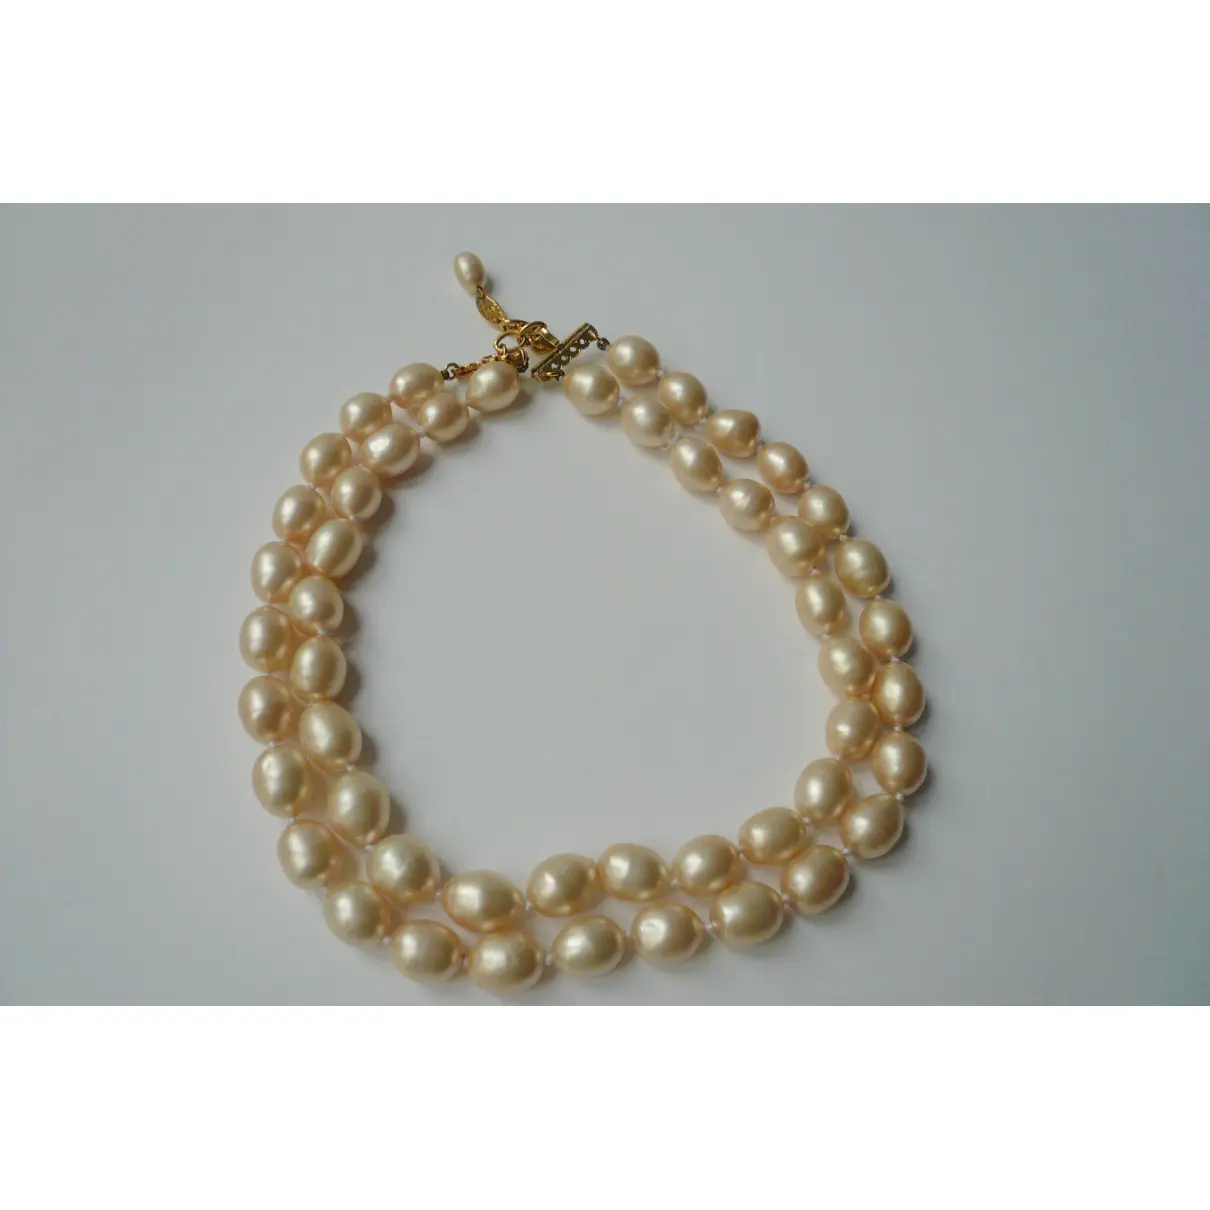 Buy Chanel Pearls necklace online - Vintage